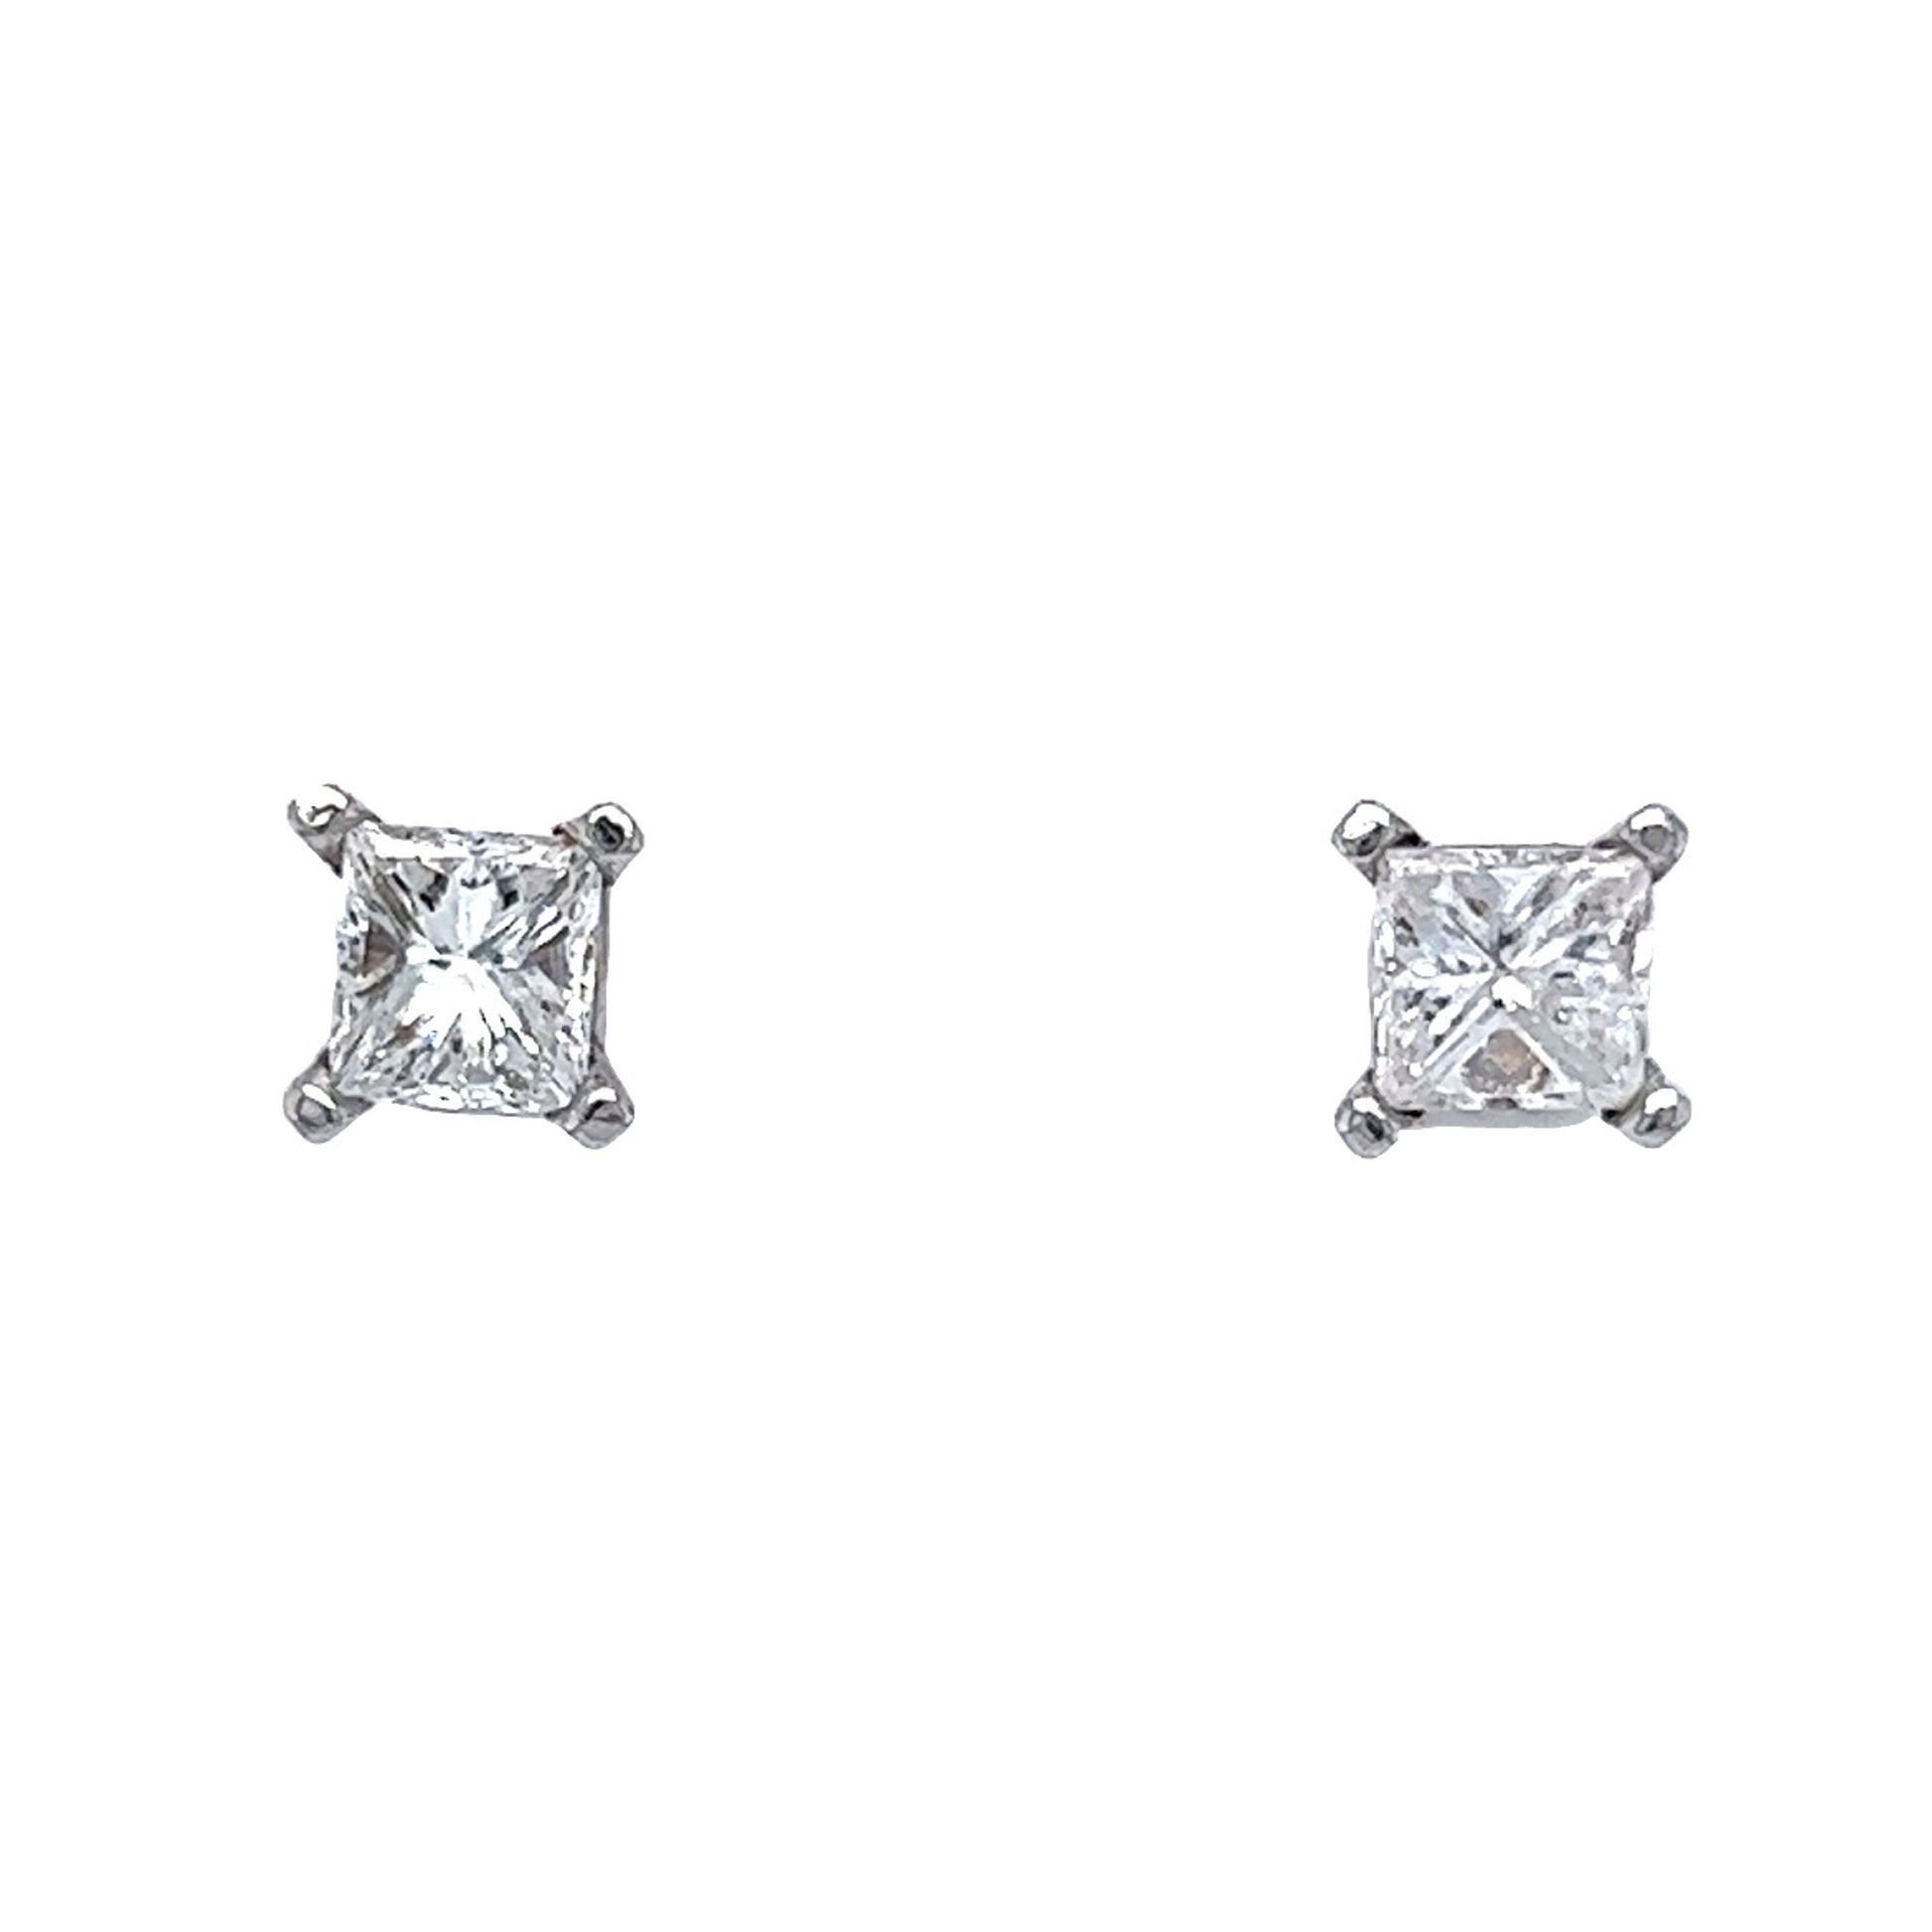 1 Carat Diamond Earring Studs in 14k White GoldComposition: 14 Karat White GoldTotal Diamond Weight: 1.01 ctTotal Gram Weight: 1.5 gInscription: 14k